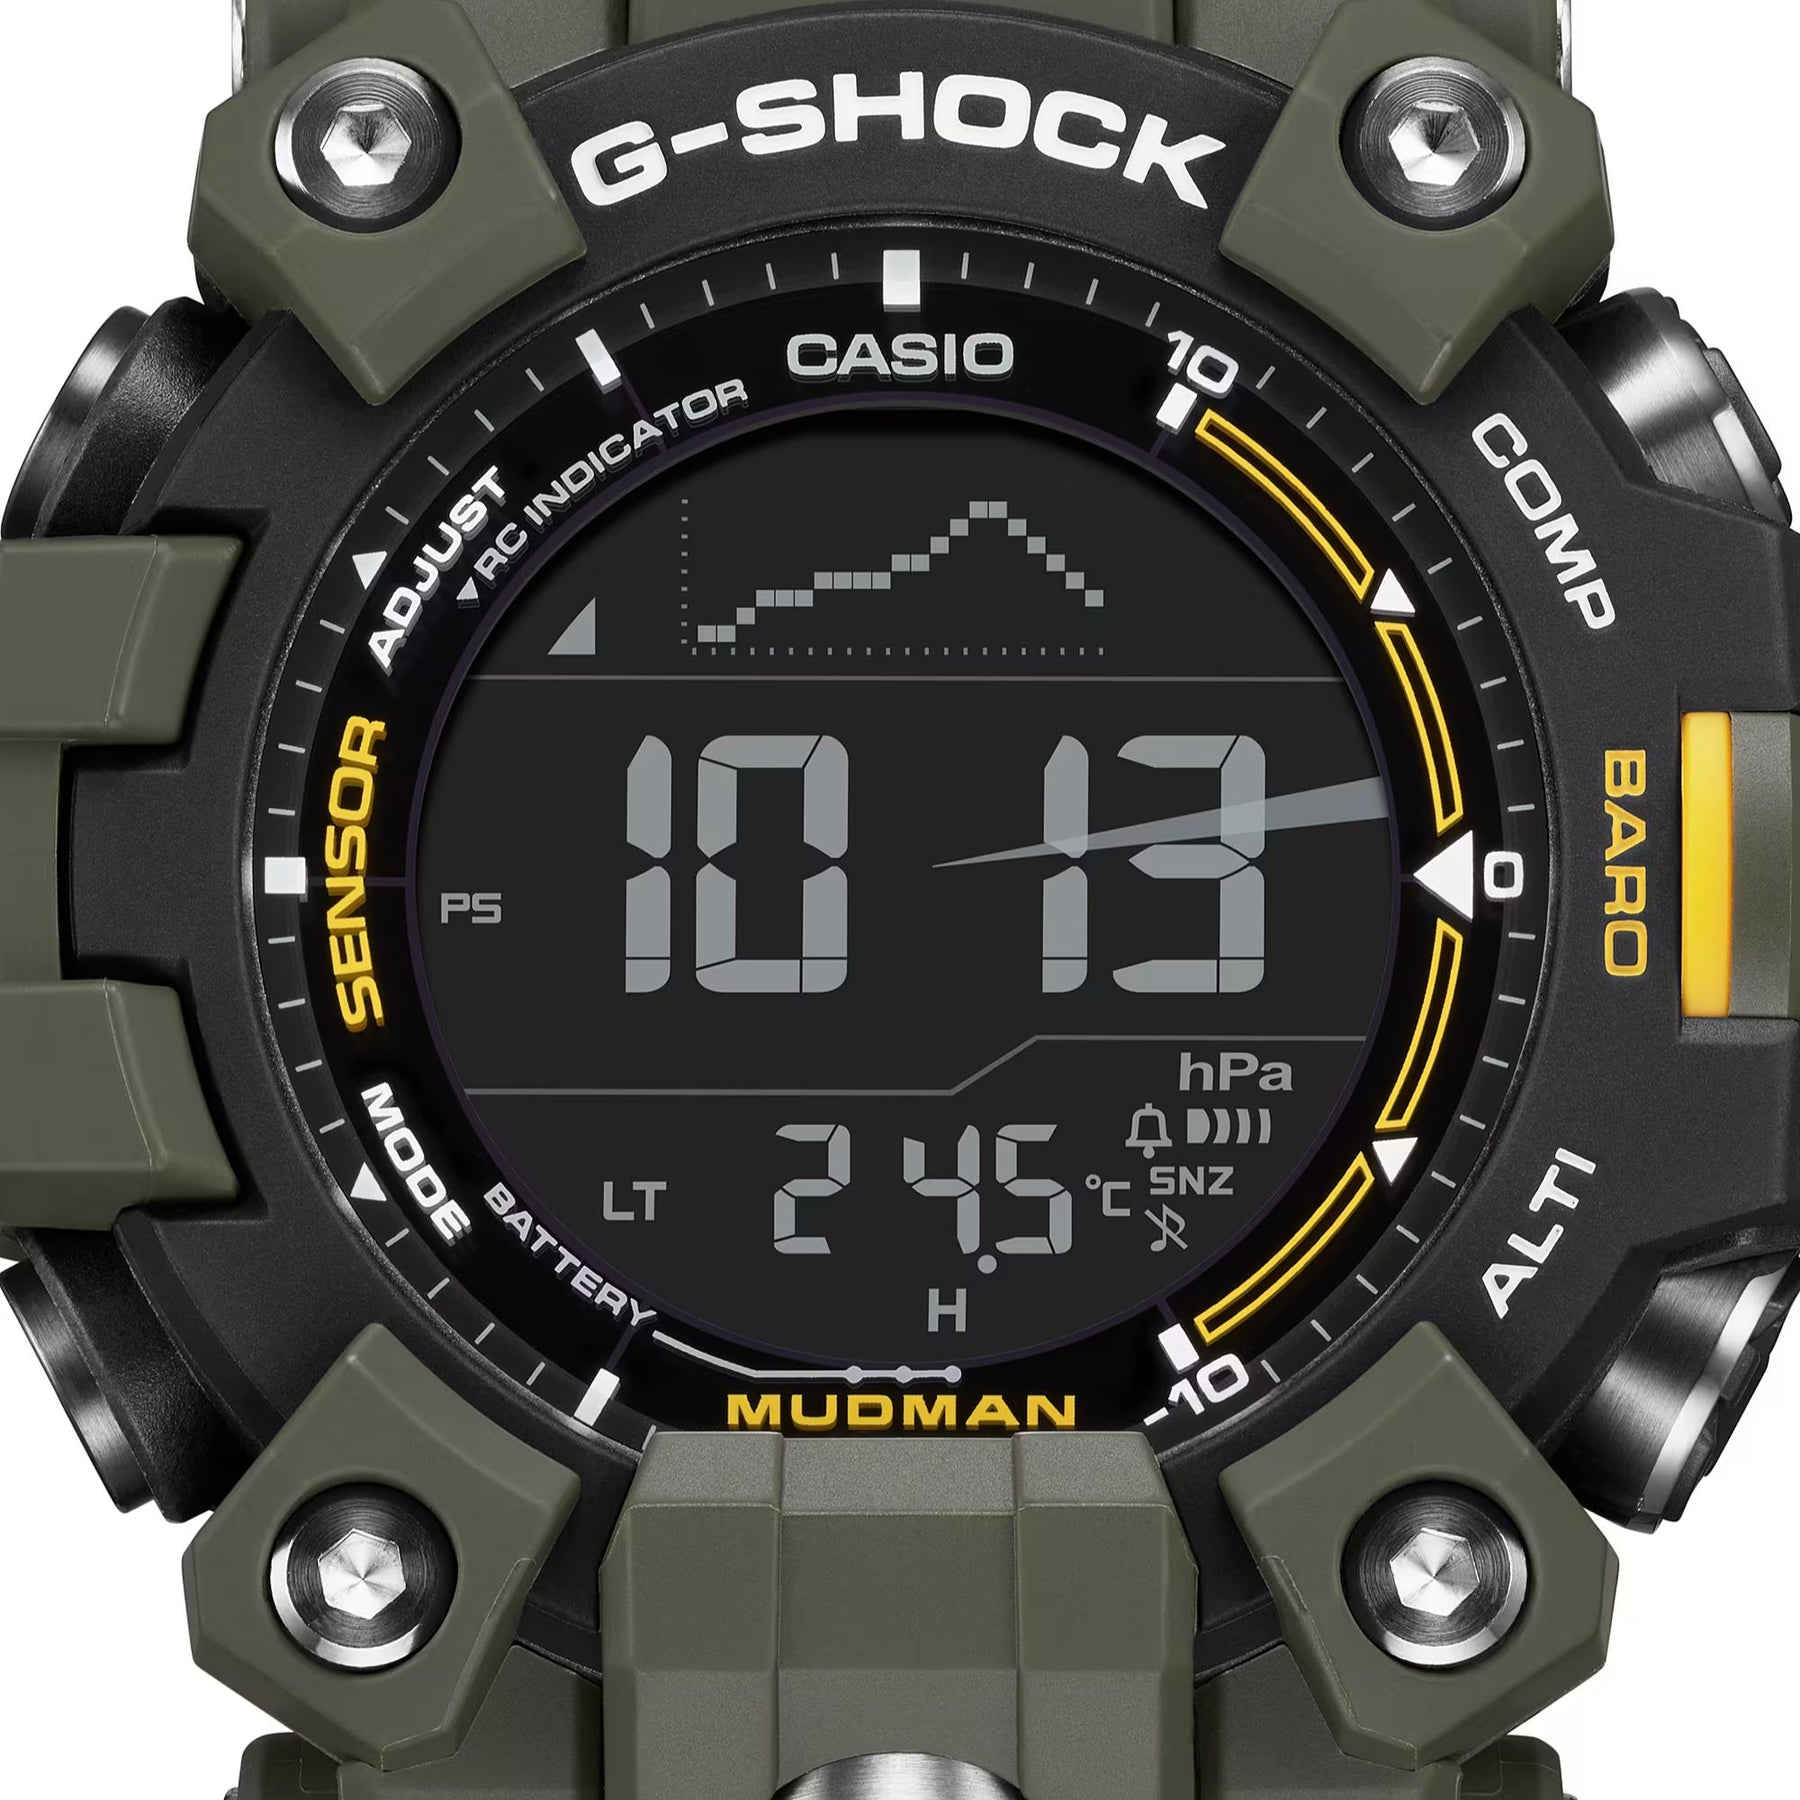 G-SHOCK GW-9500-3ER - MUDMAN